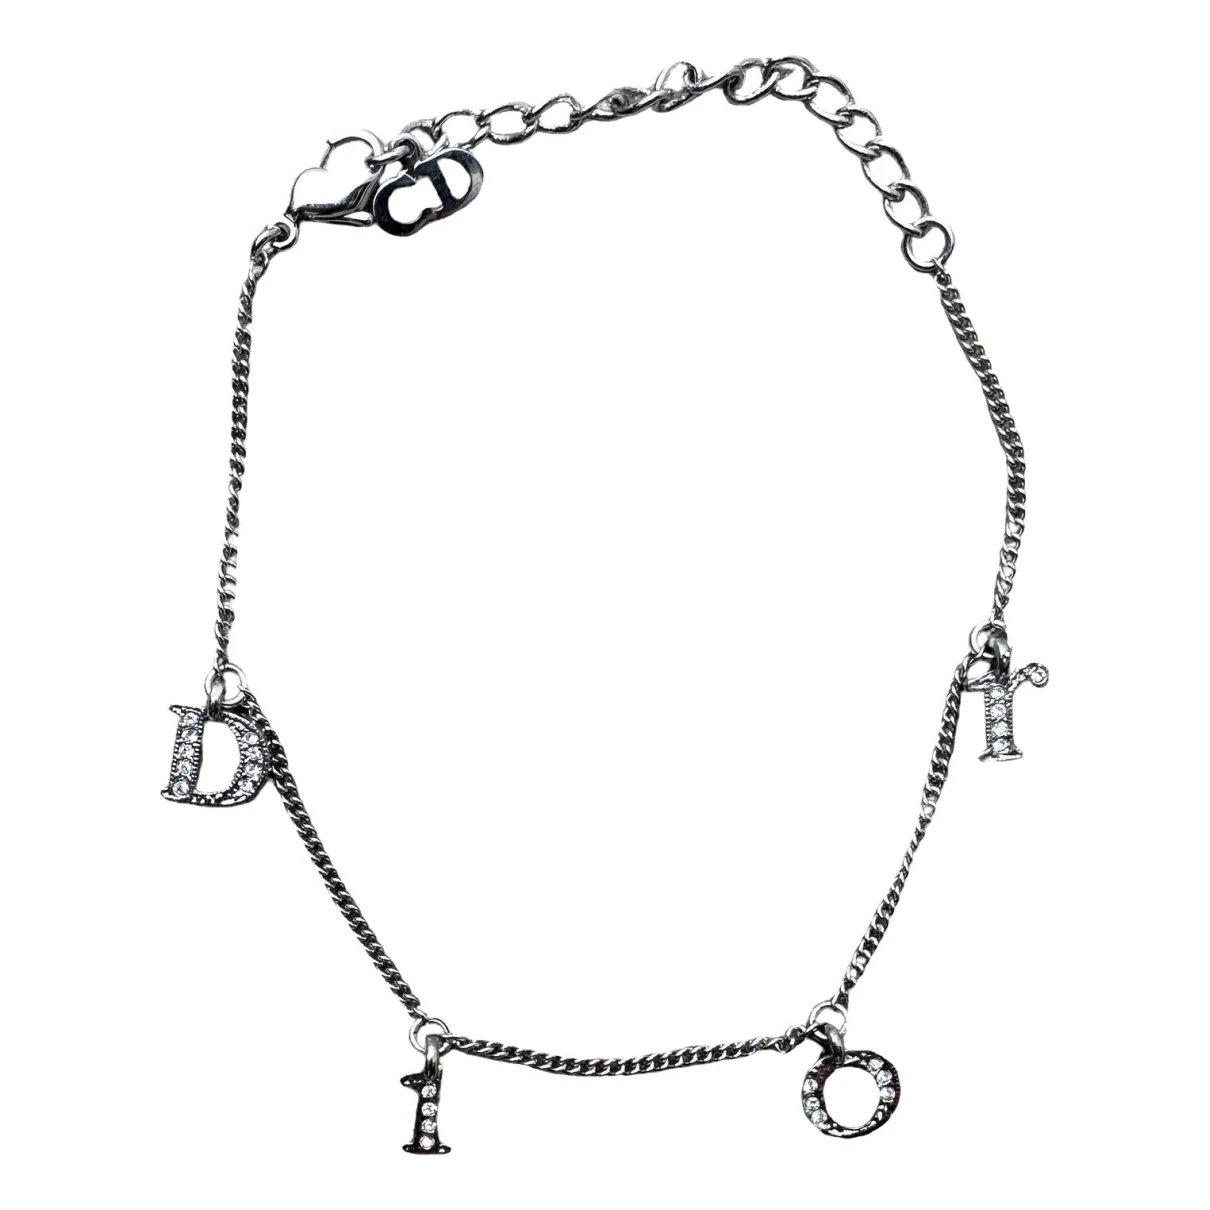 Pre-owned Dior Bracelet In Silver